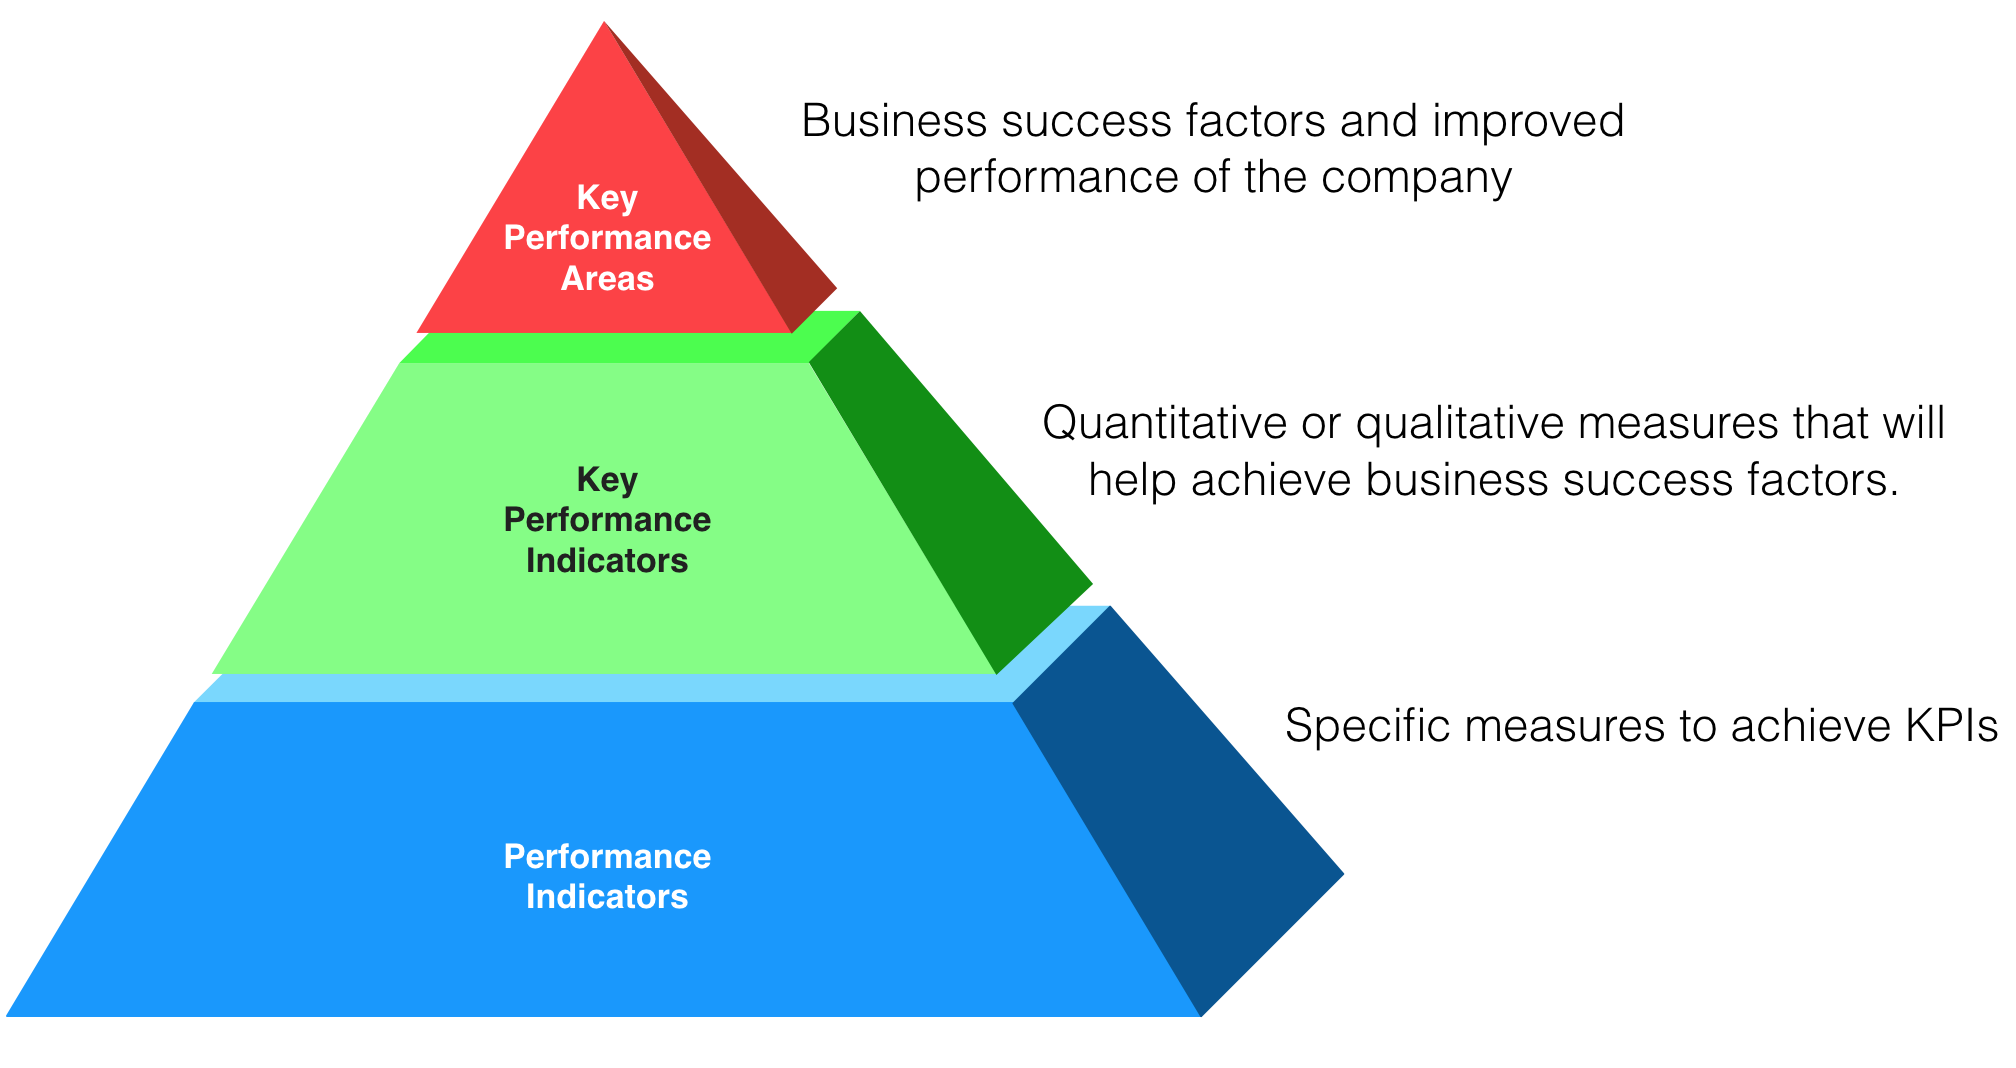 Key Performance Areas VS Key Performance Indicators VS Performance Indicators